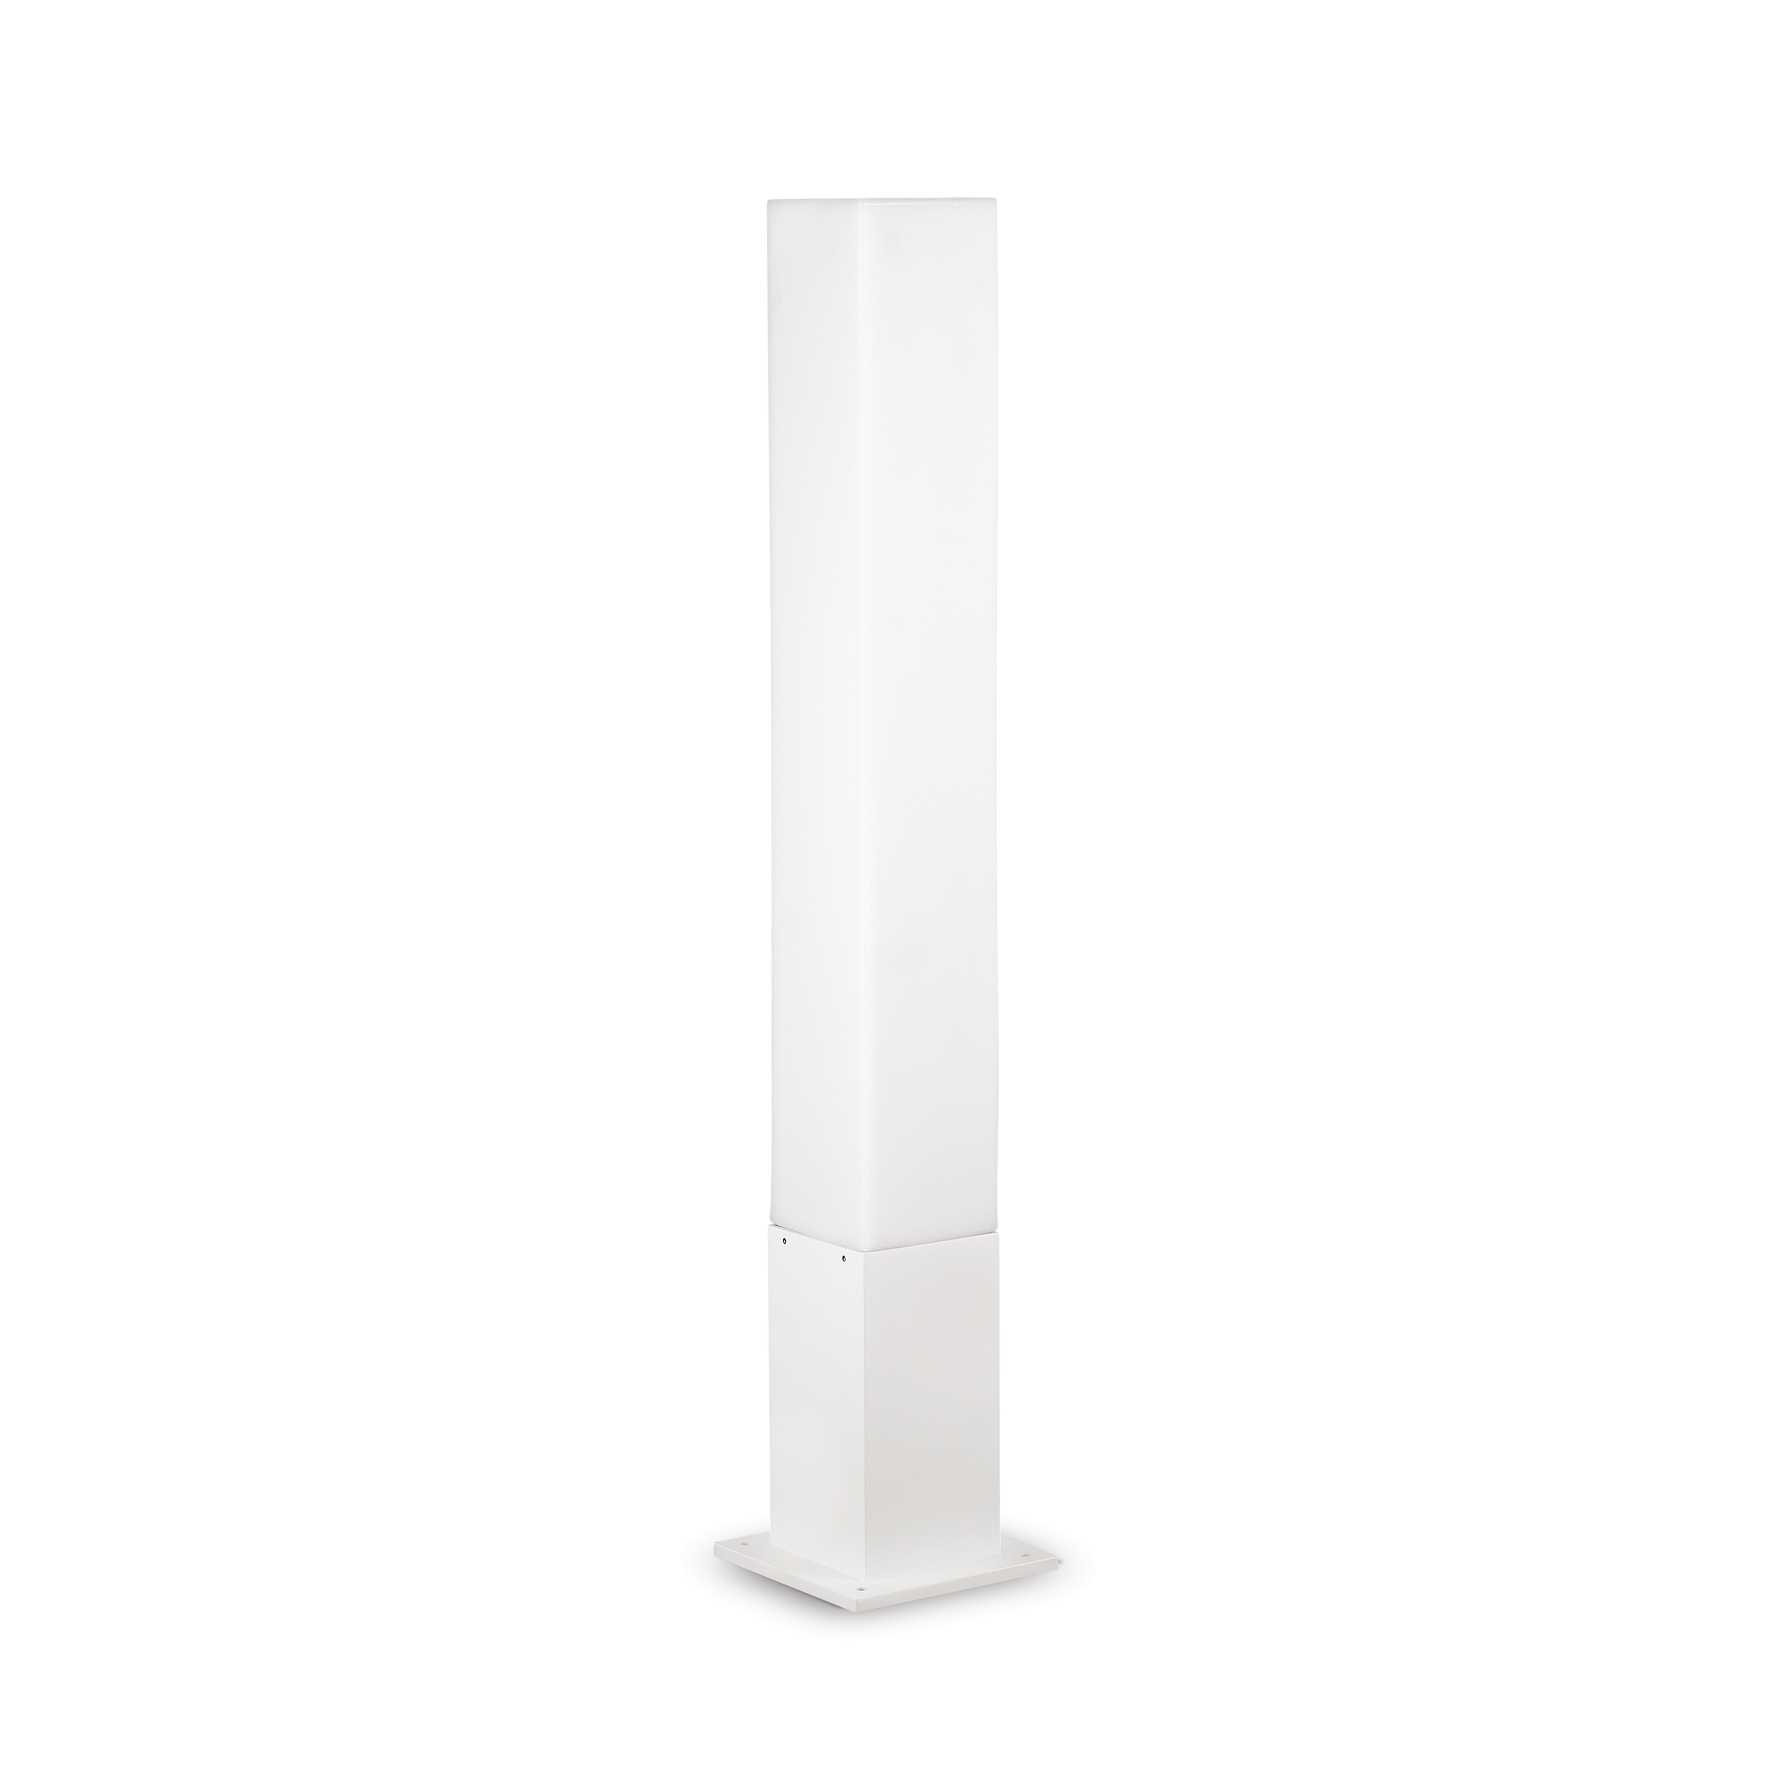 AD hotelska oprema Vanjska podna lampa  Edo outdoor pt1 (kvadratna)- Bijele boje slika proizvoda